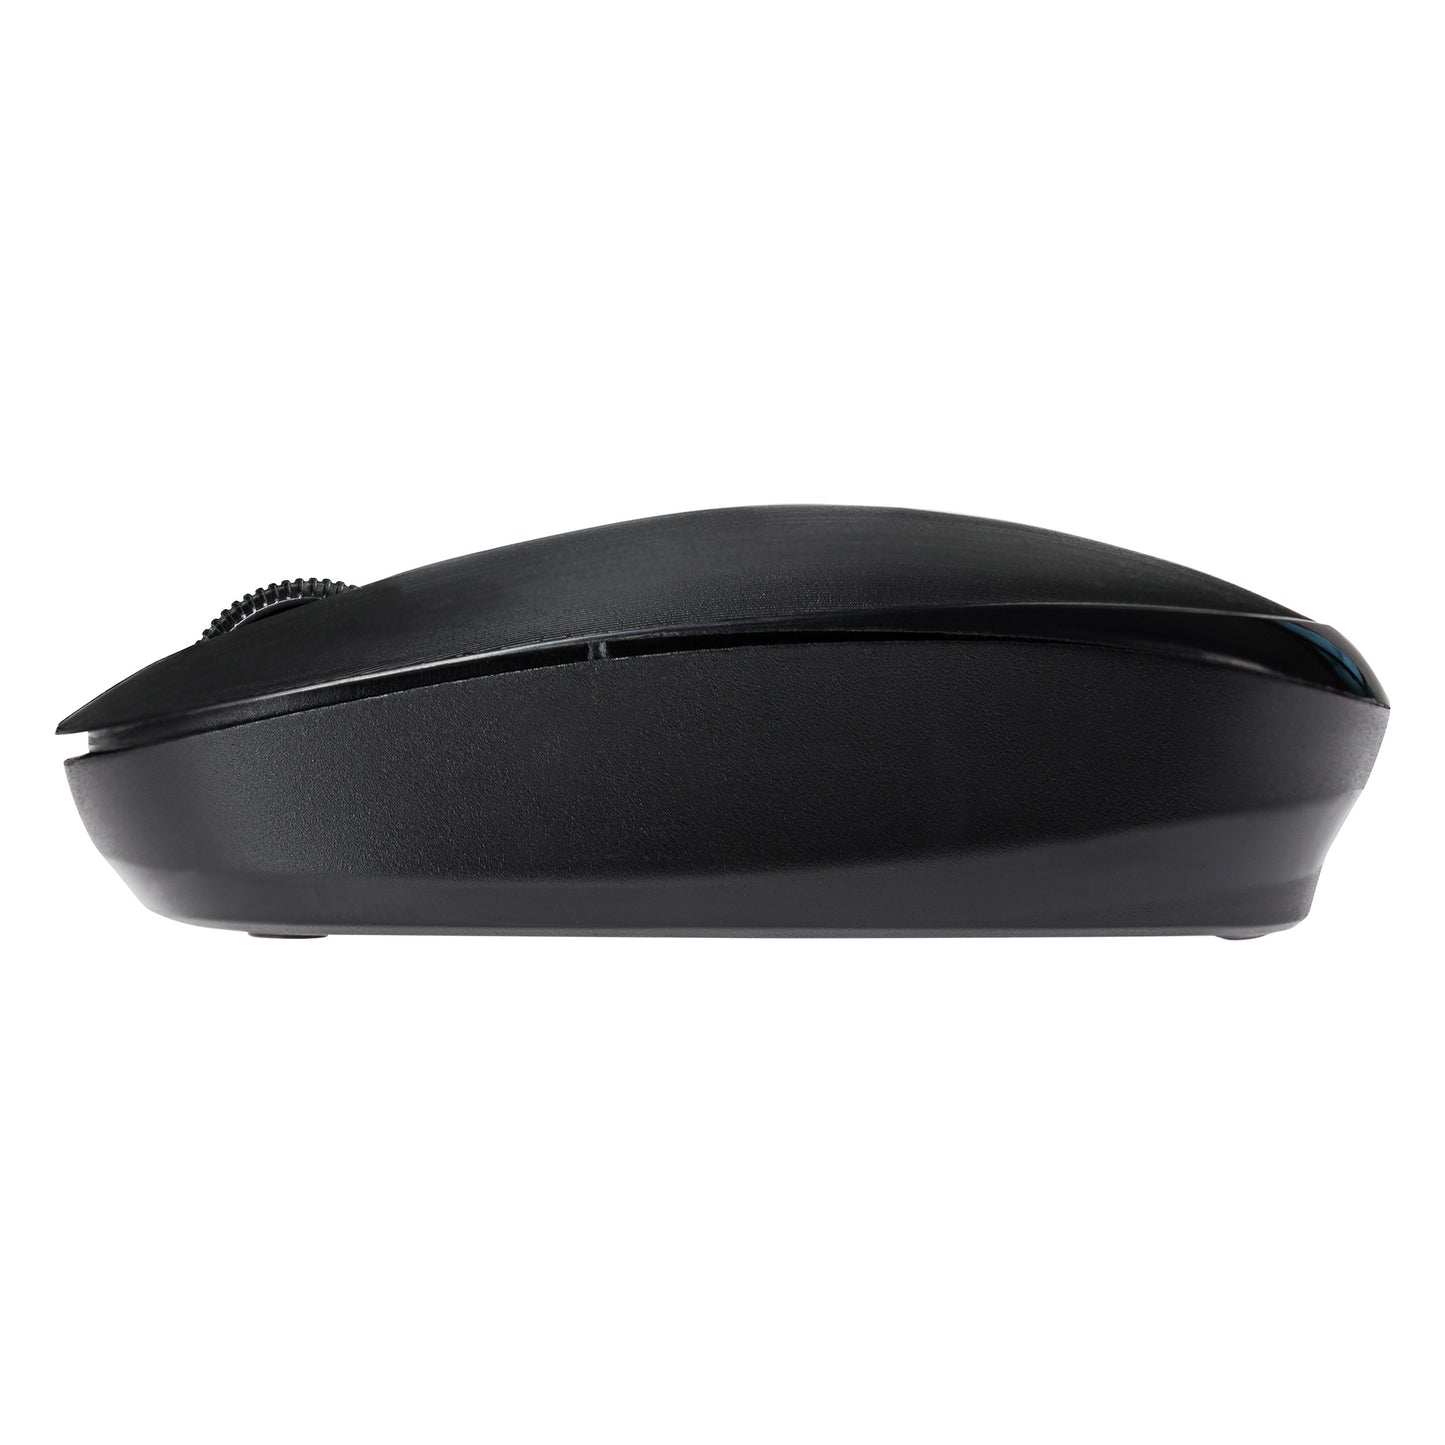 Hama MW-110 Ambidextrous 3-Button Wireless Optical Mouse - Black - maplin.co.uk